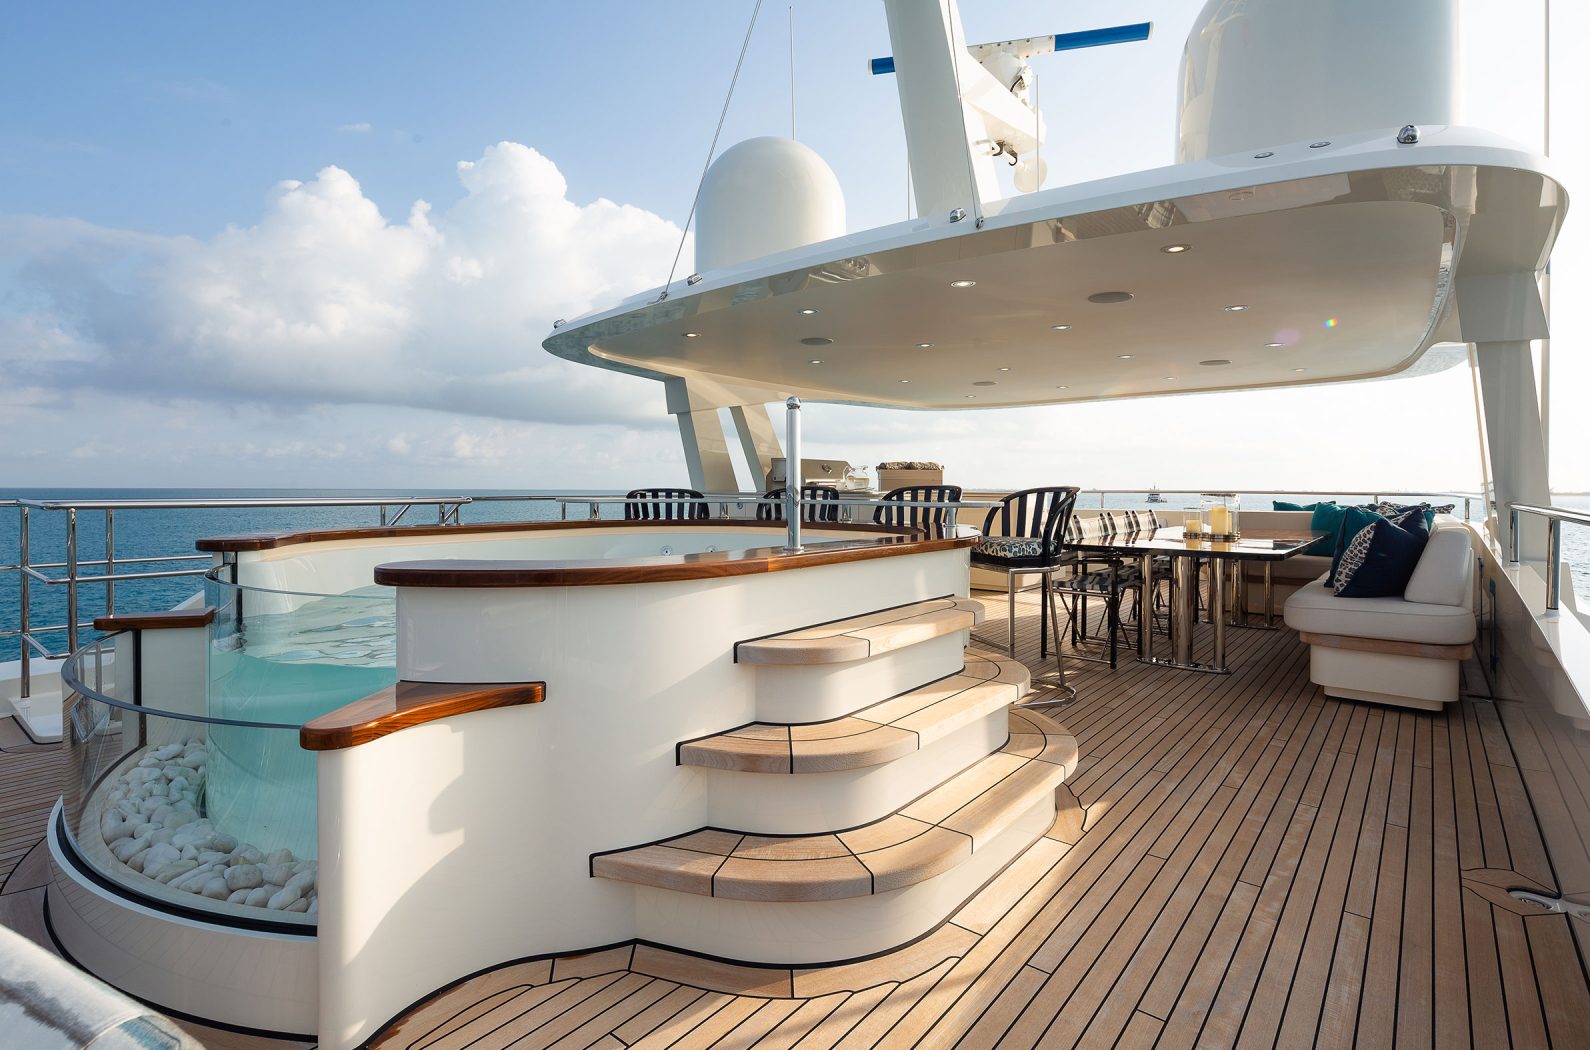 36m superyacht Botti sun deck designed by Studio Indigo